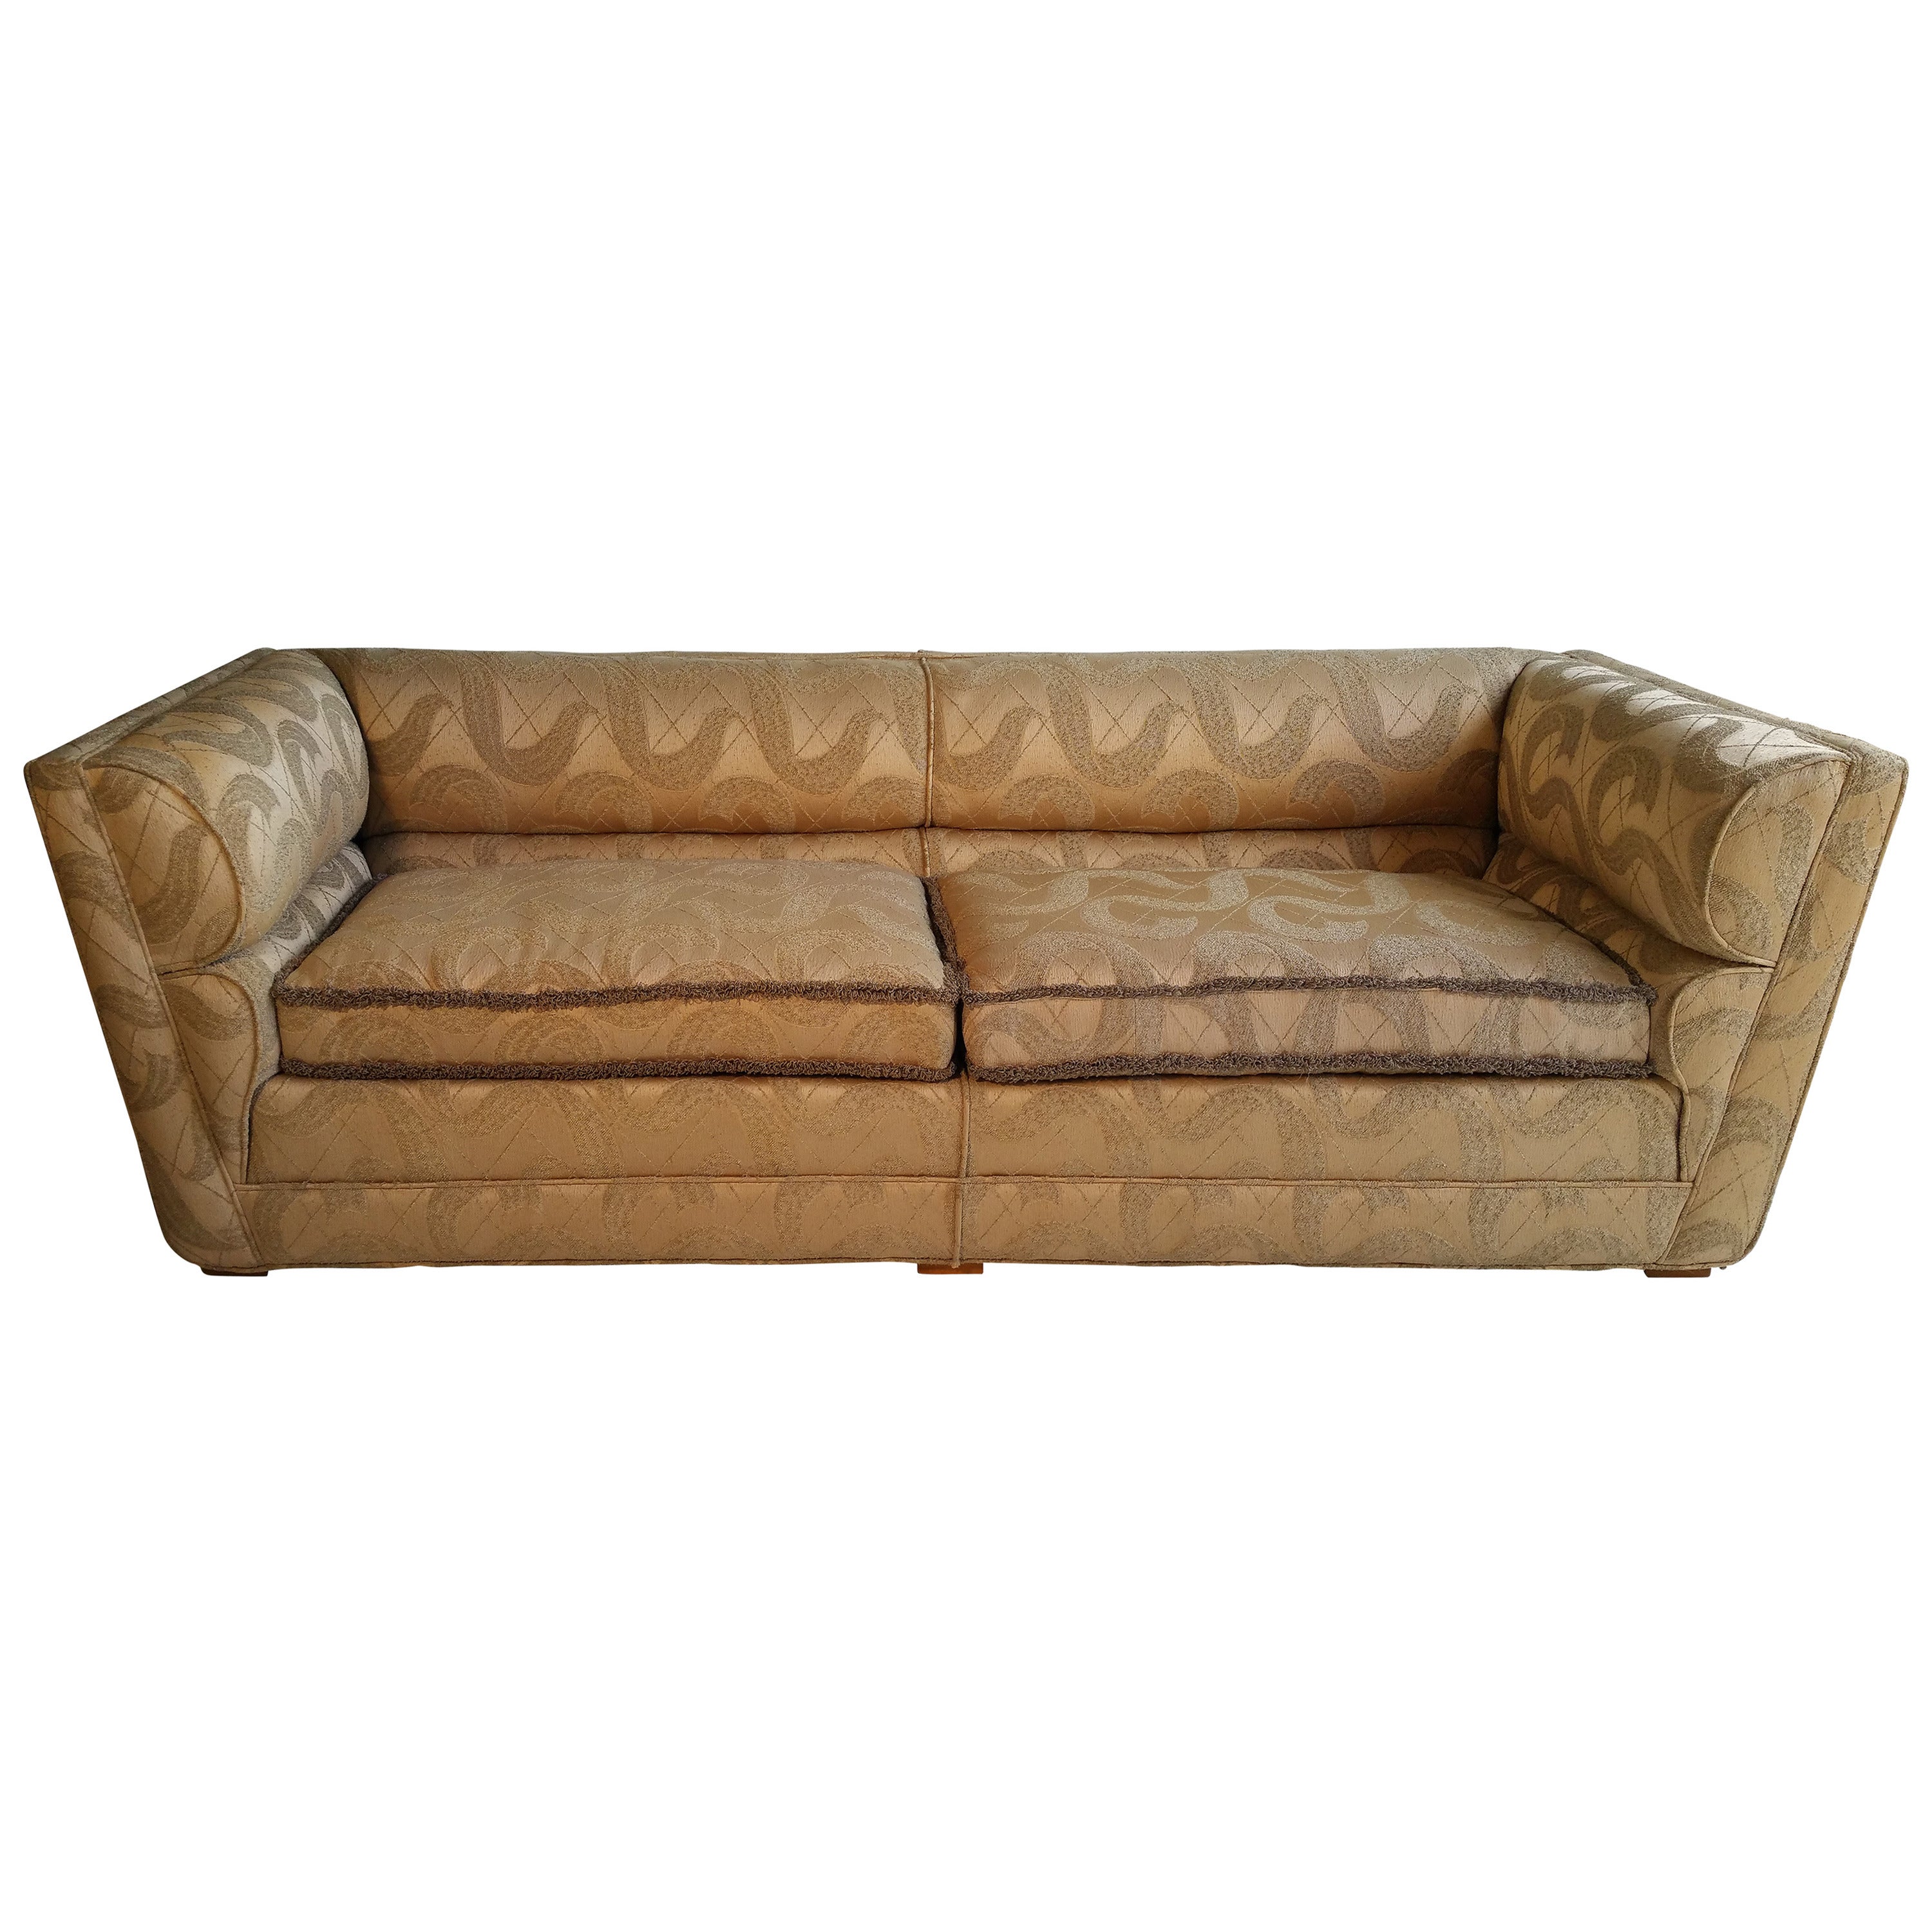 Outstanding Art Deco Sofa Original Sculpted Brocade Fabric